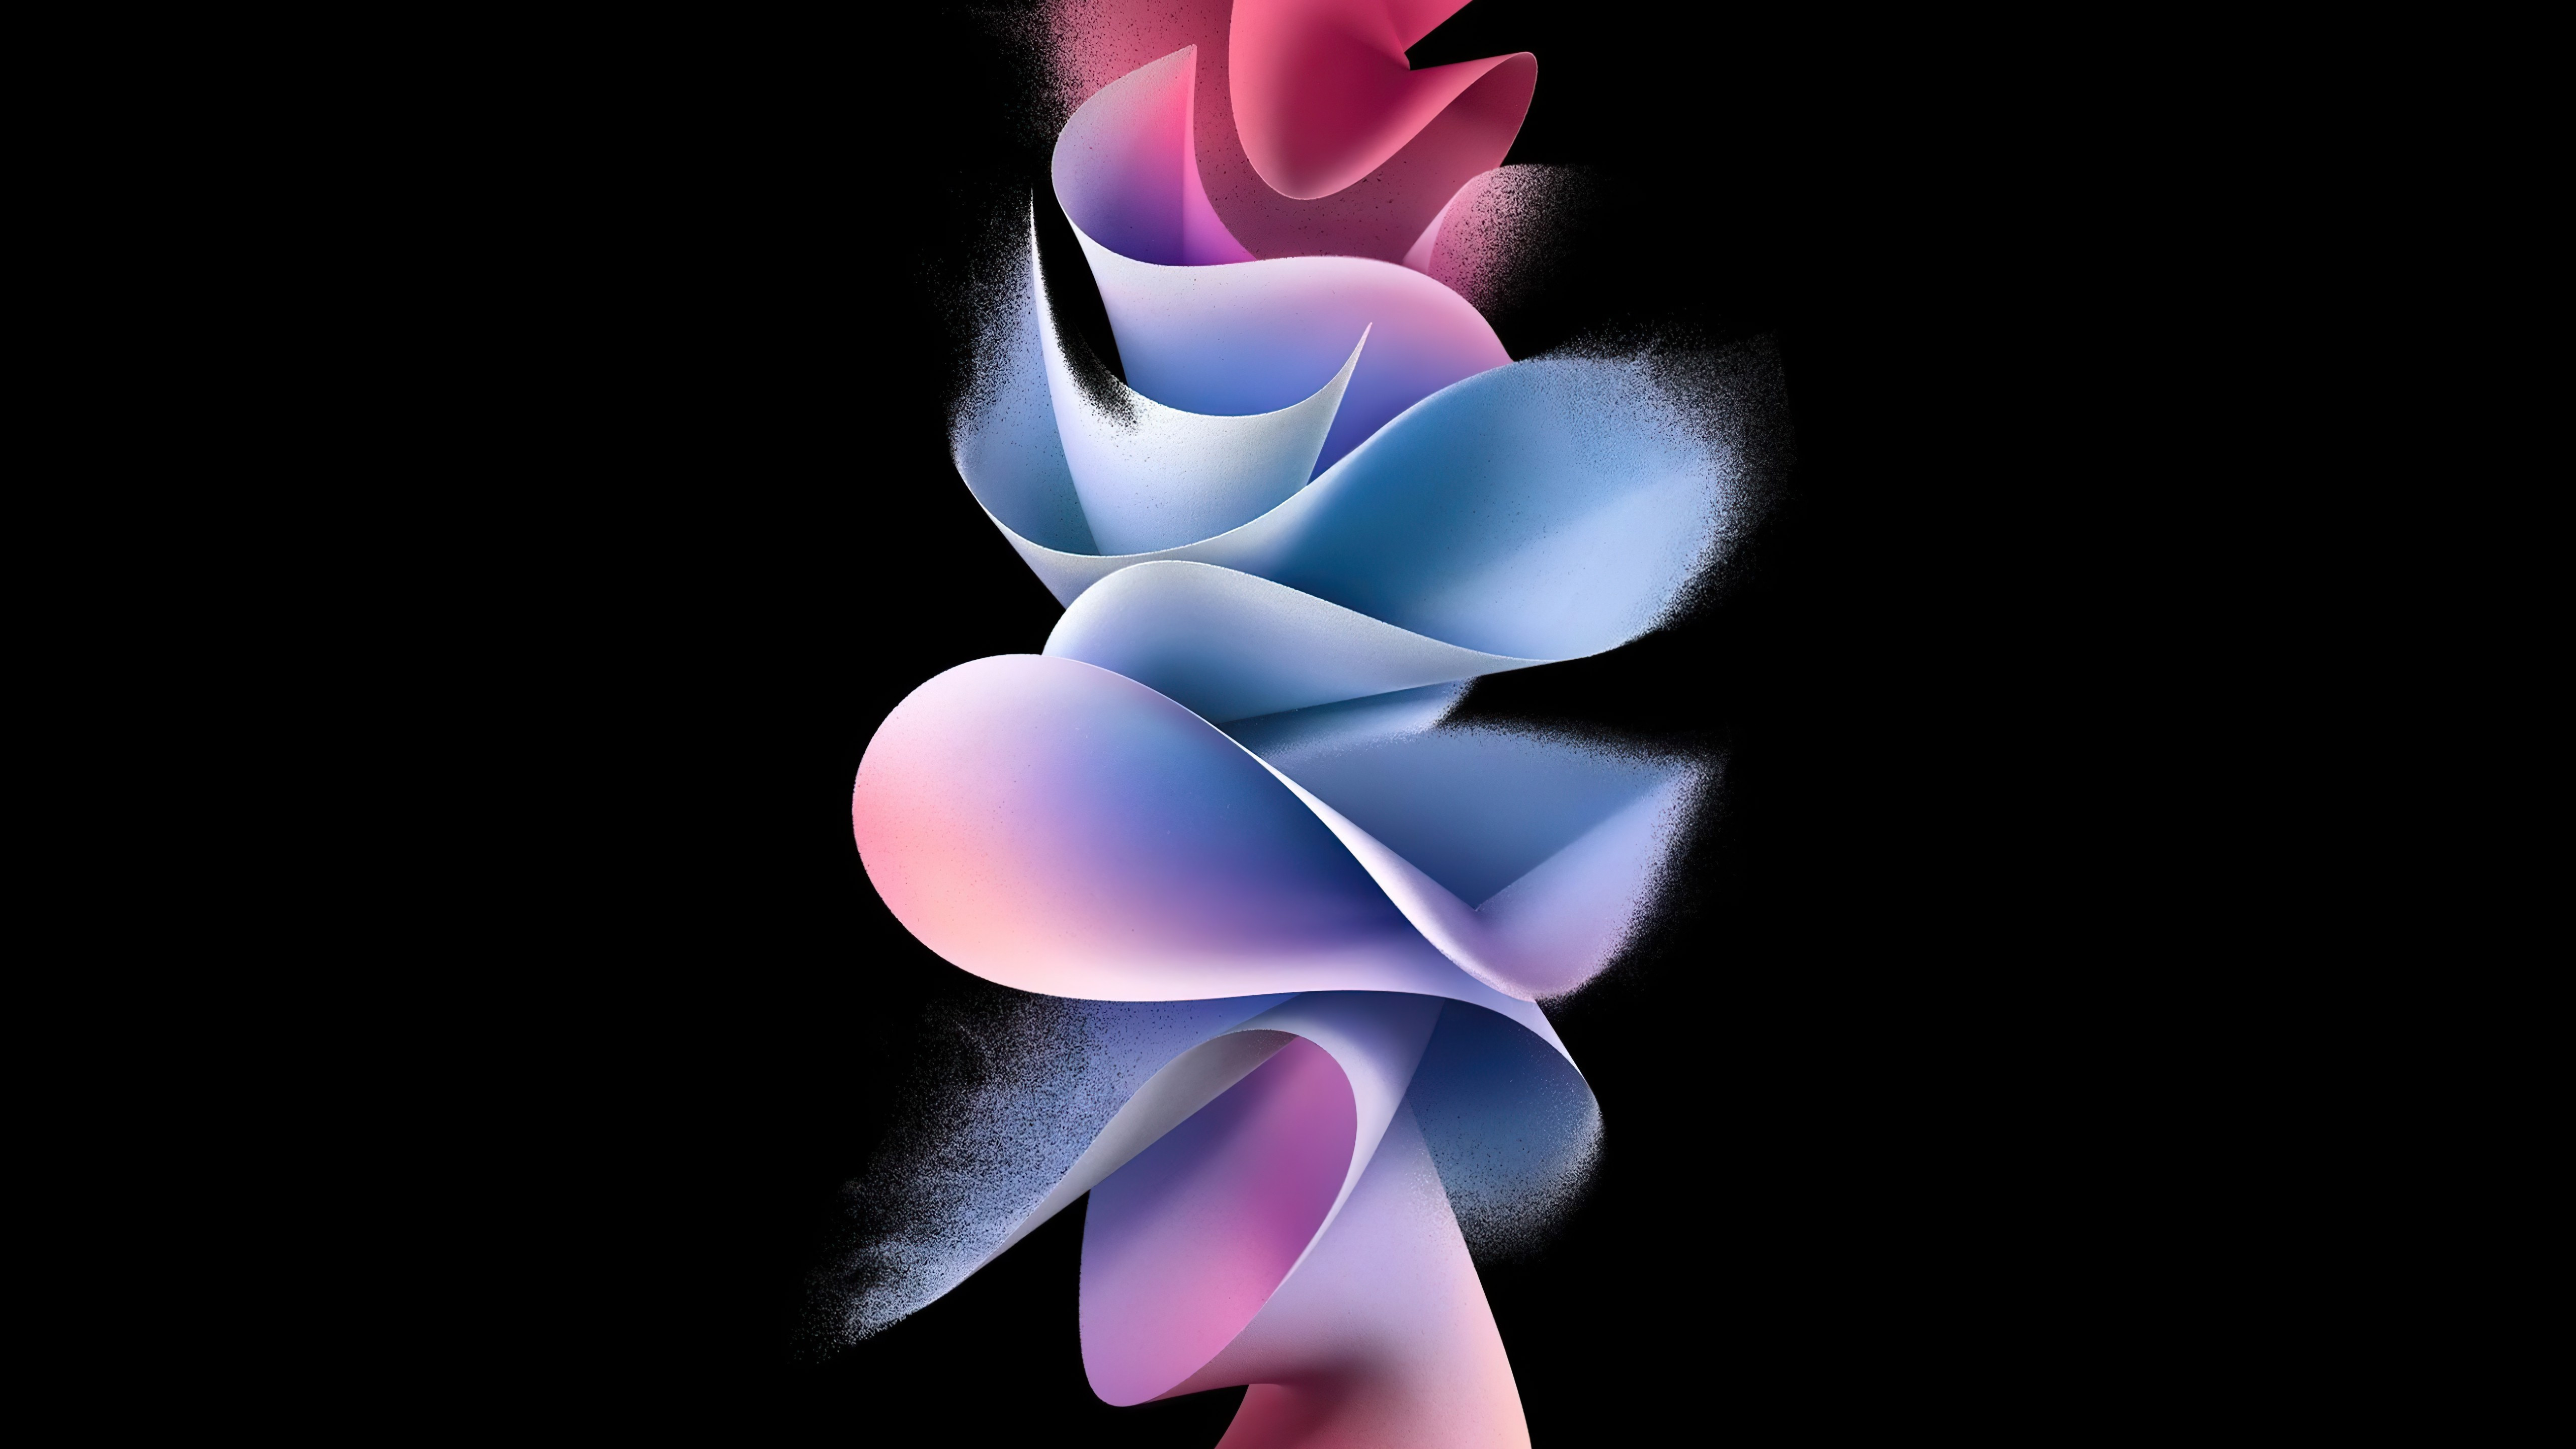 Insane abstract beauty on Samsung Galaxy Z Flip 3 wallpaper 5120x2880